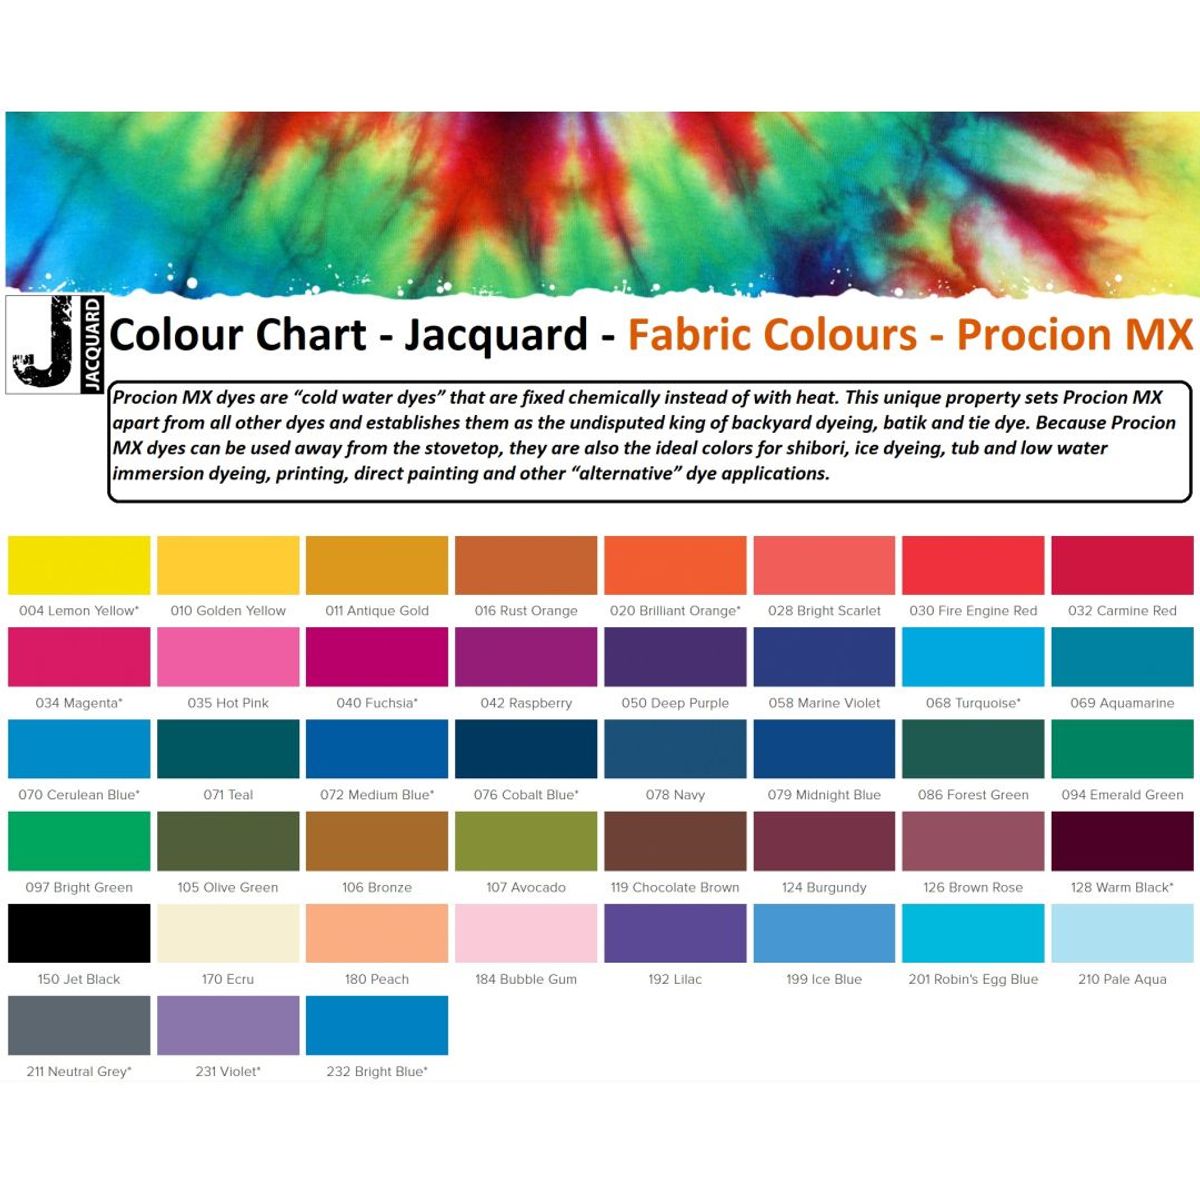 Jacquard - Procion MX Dye - Fabric Textile - Magenta 034